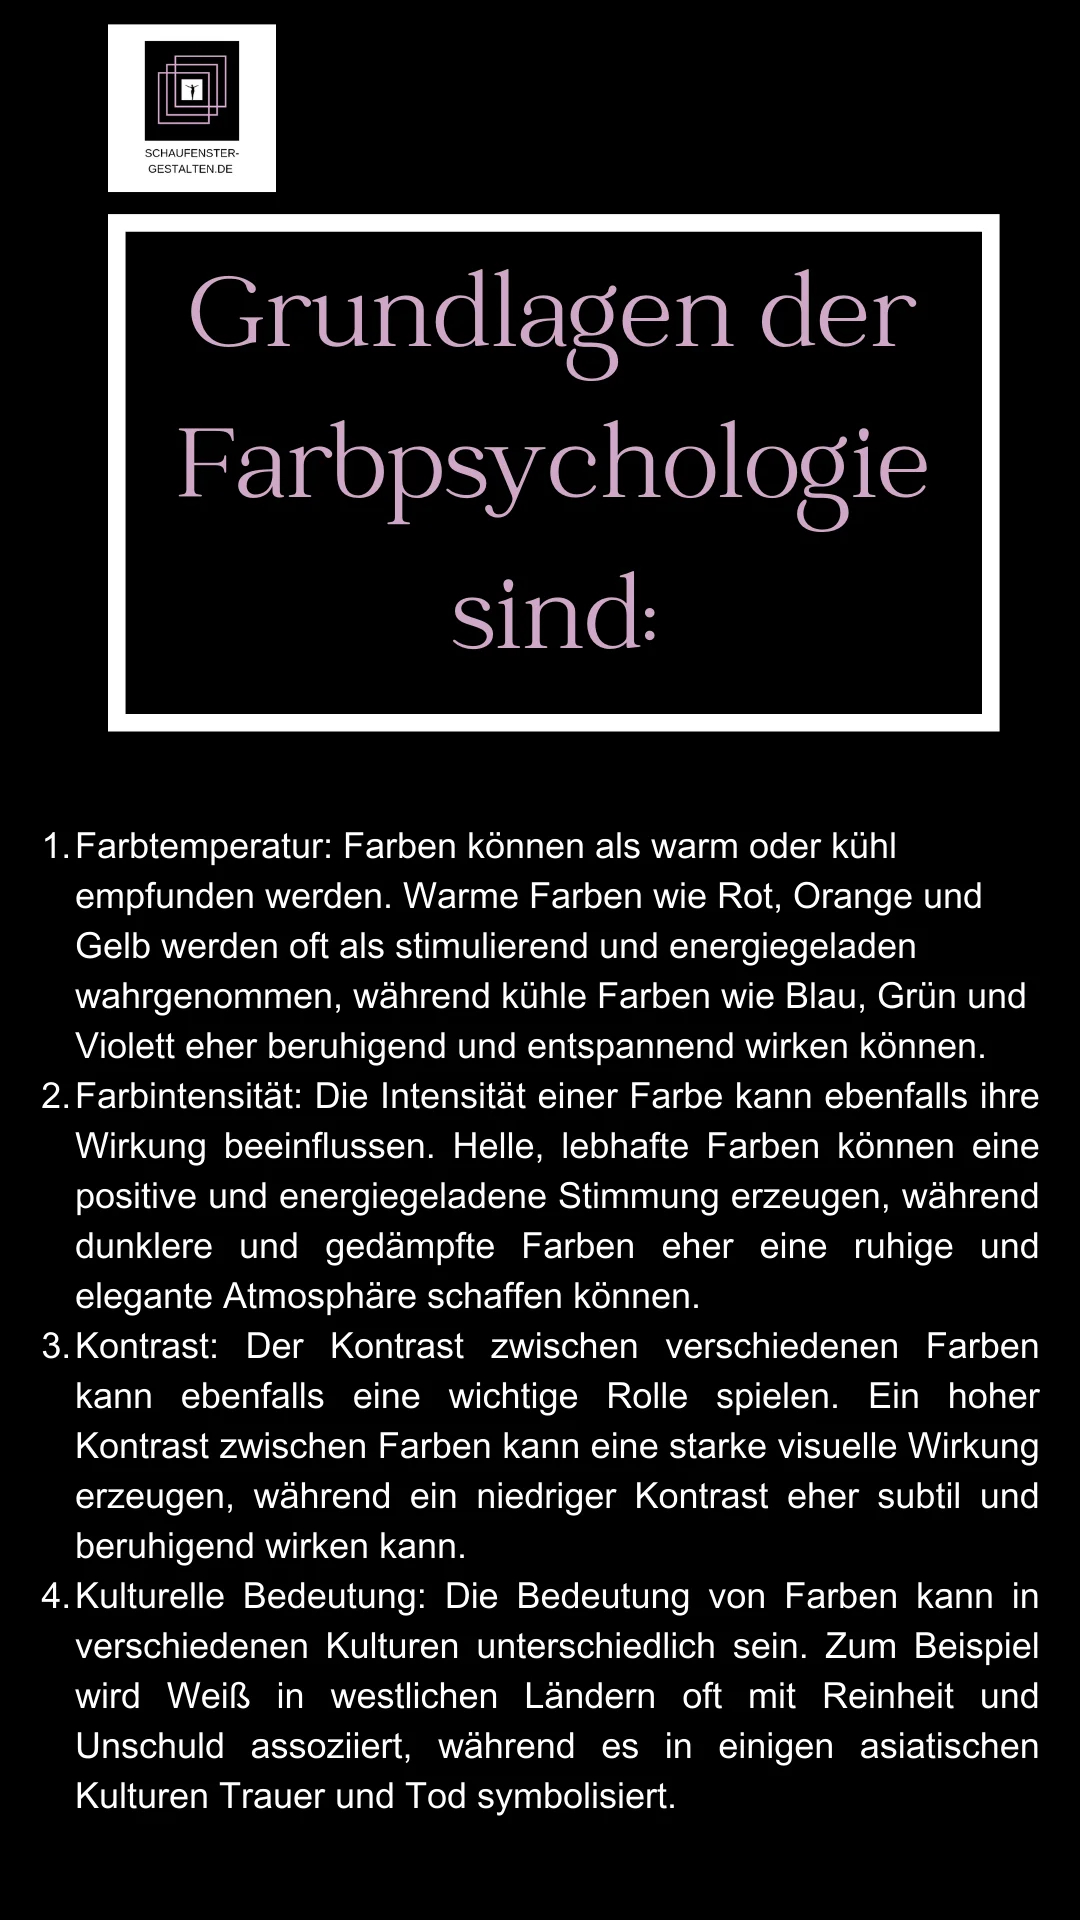 Farbpsychologie